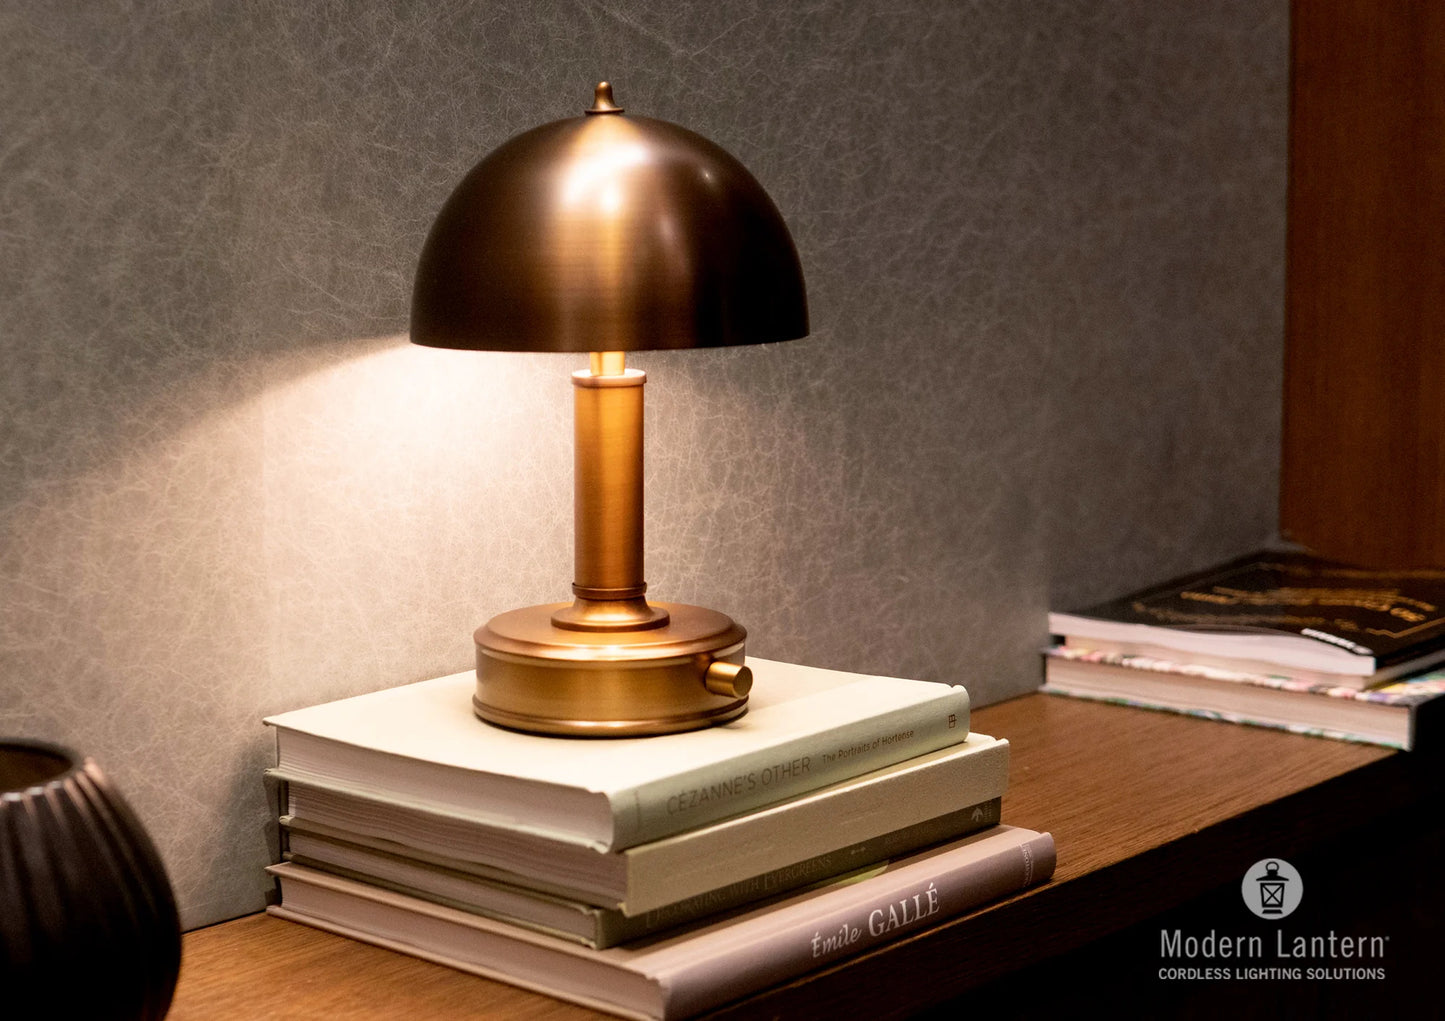 Compact and Sleek Design - Mini Tito Cordless Lamp